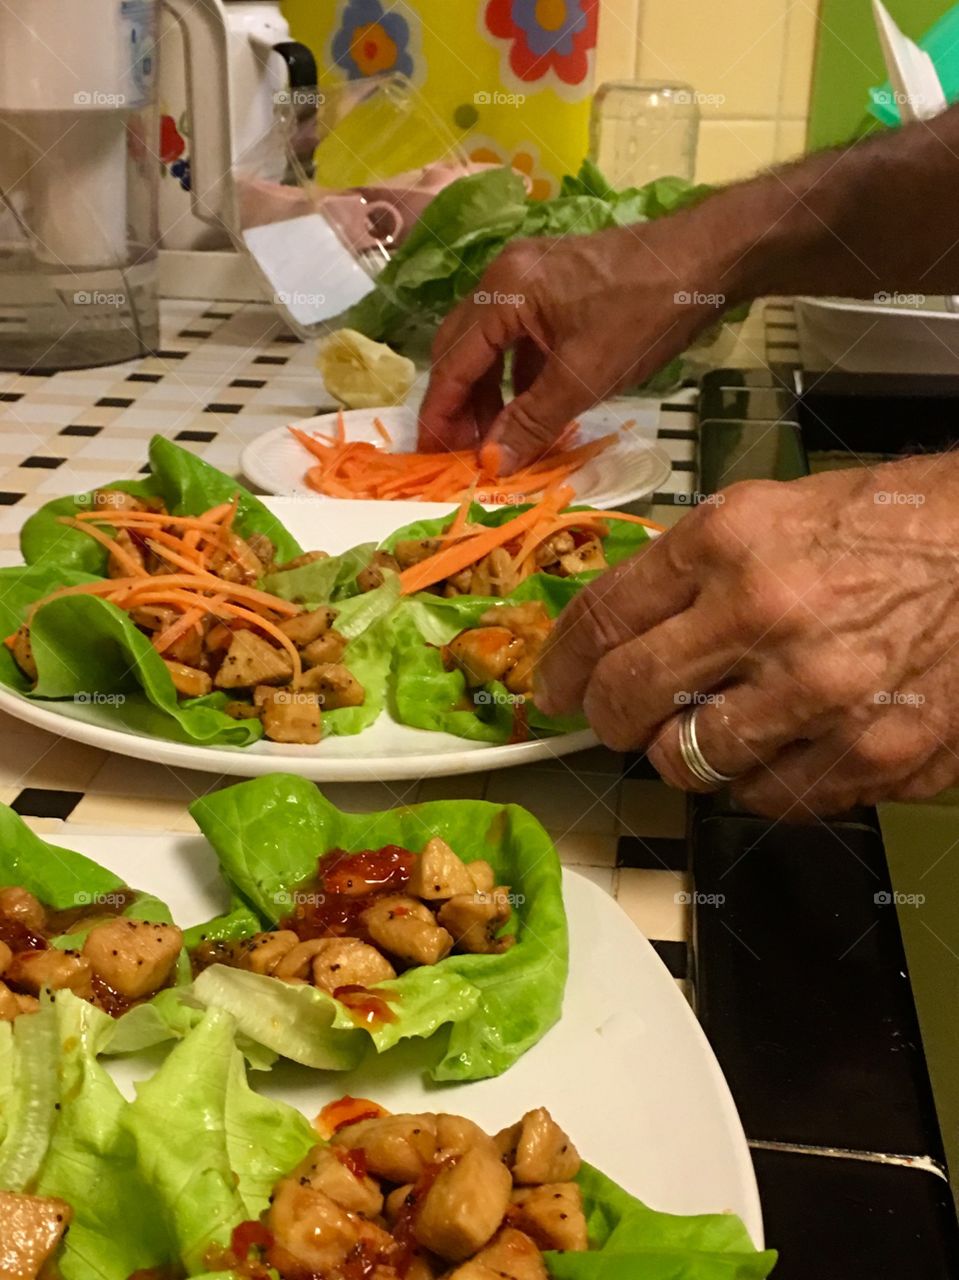 Working hands preparing Asian lettuce wraps. 